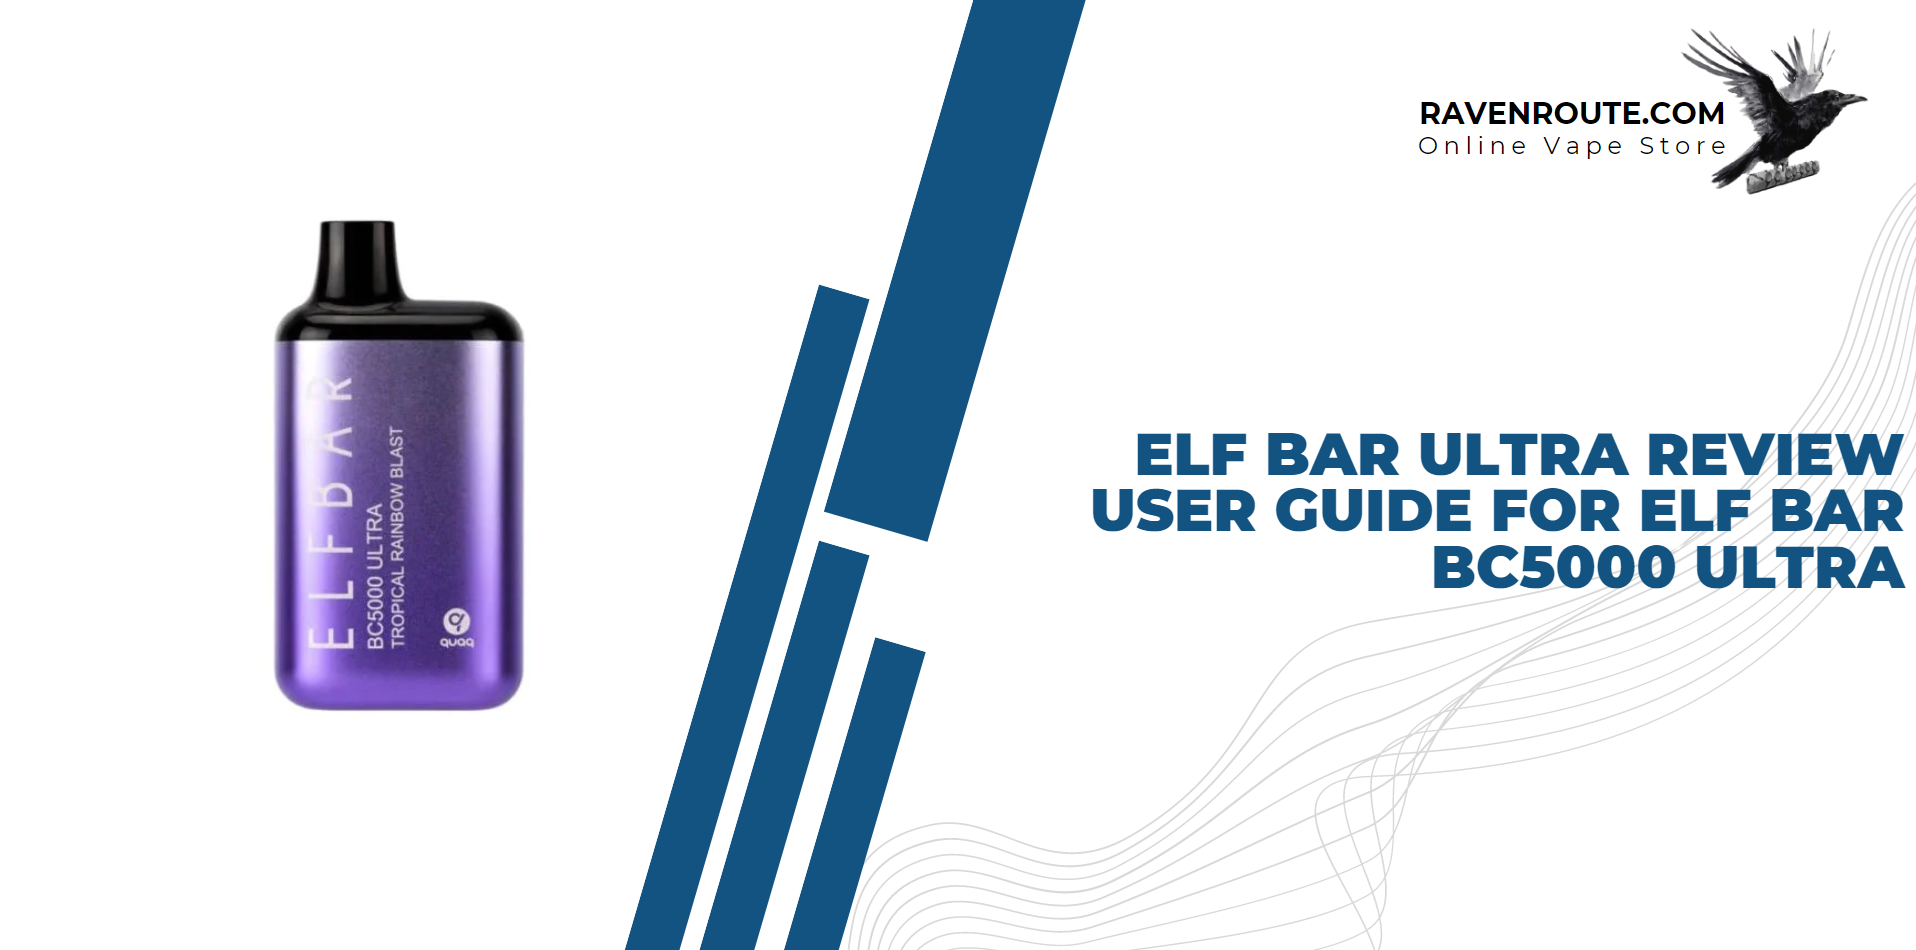 Elf Bar Ultra Review - User Guide for Elf Bar BC5000 Ultra